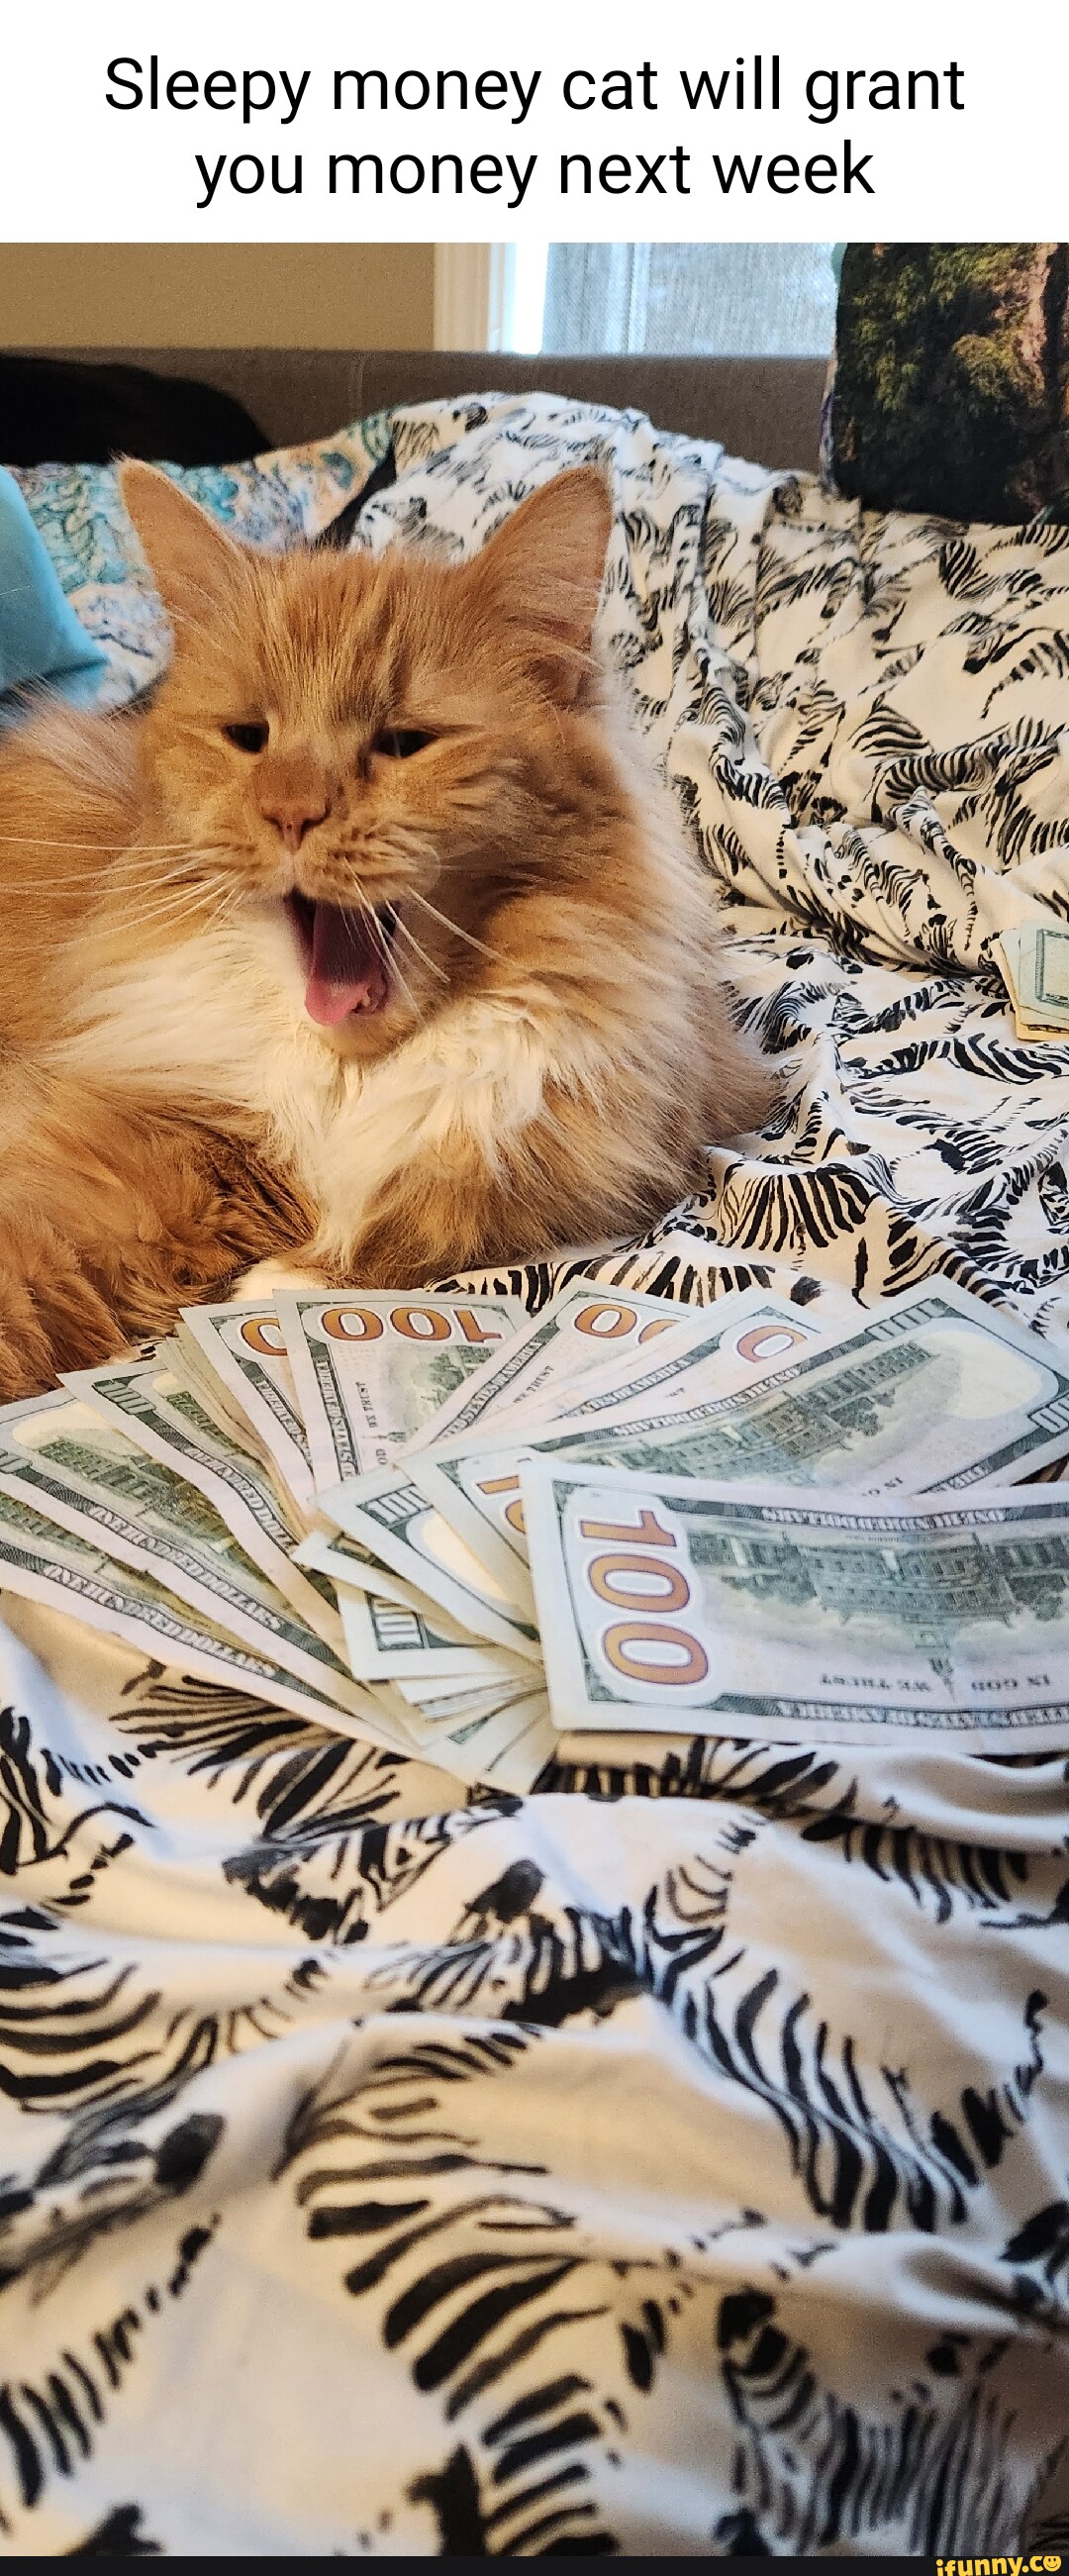 money cat meme